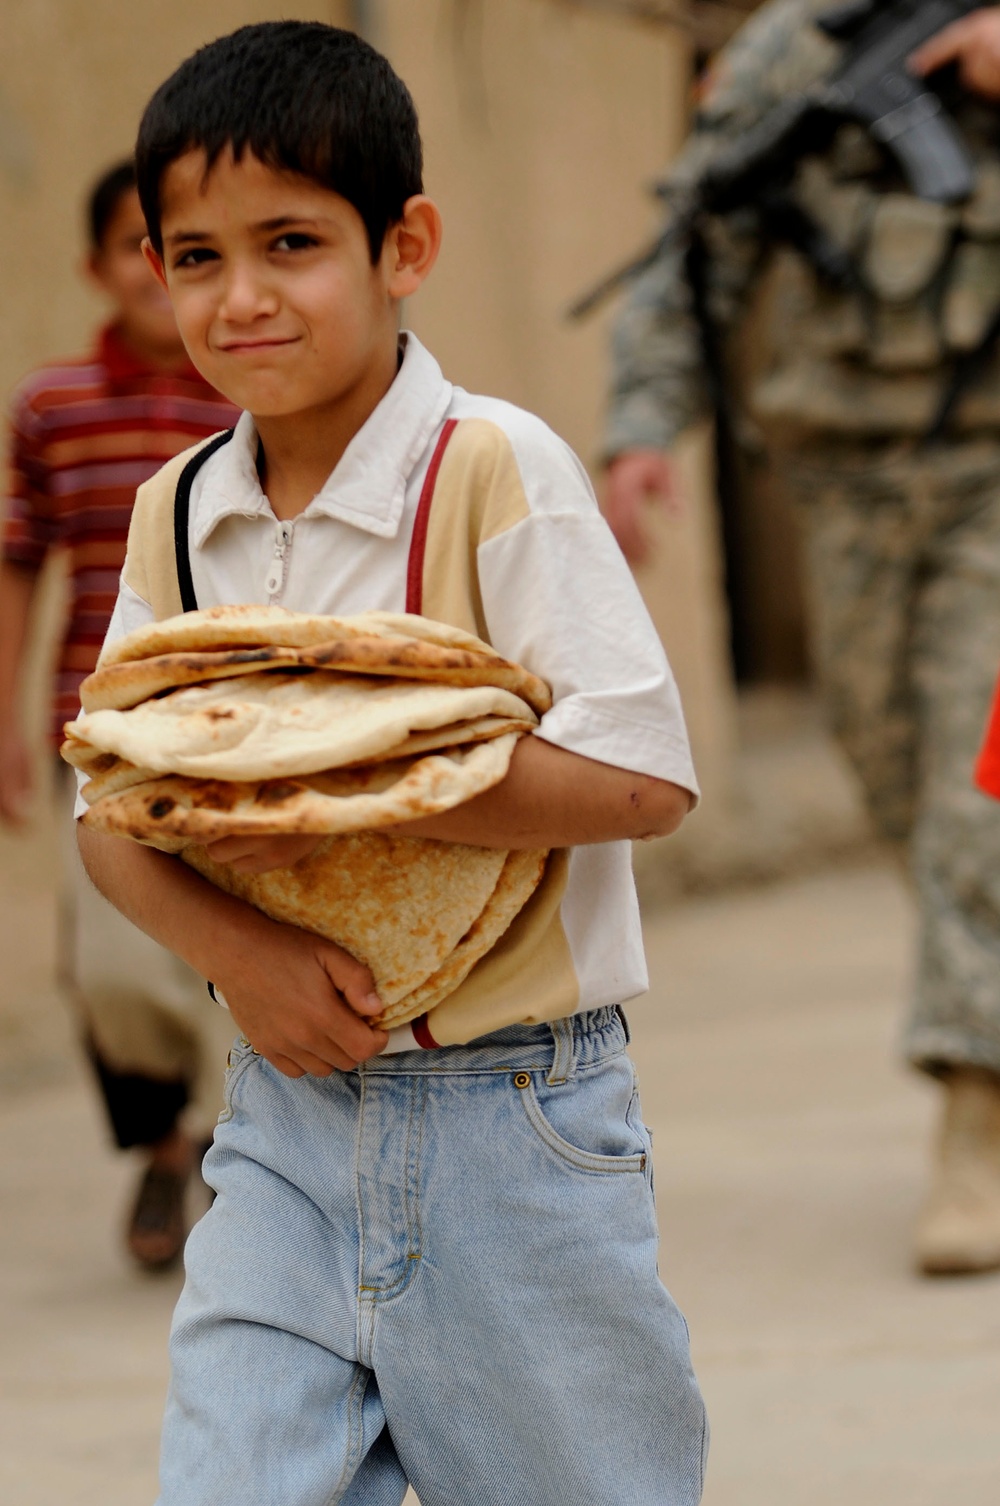 Iraqi Children Enjoy Mosul